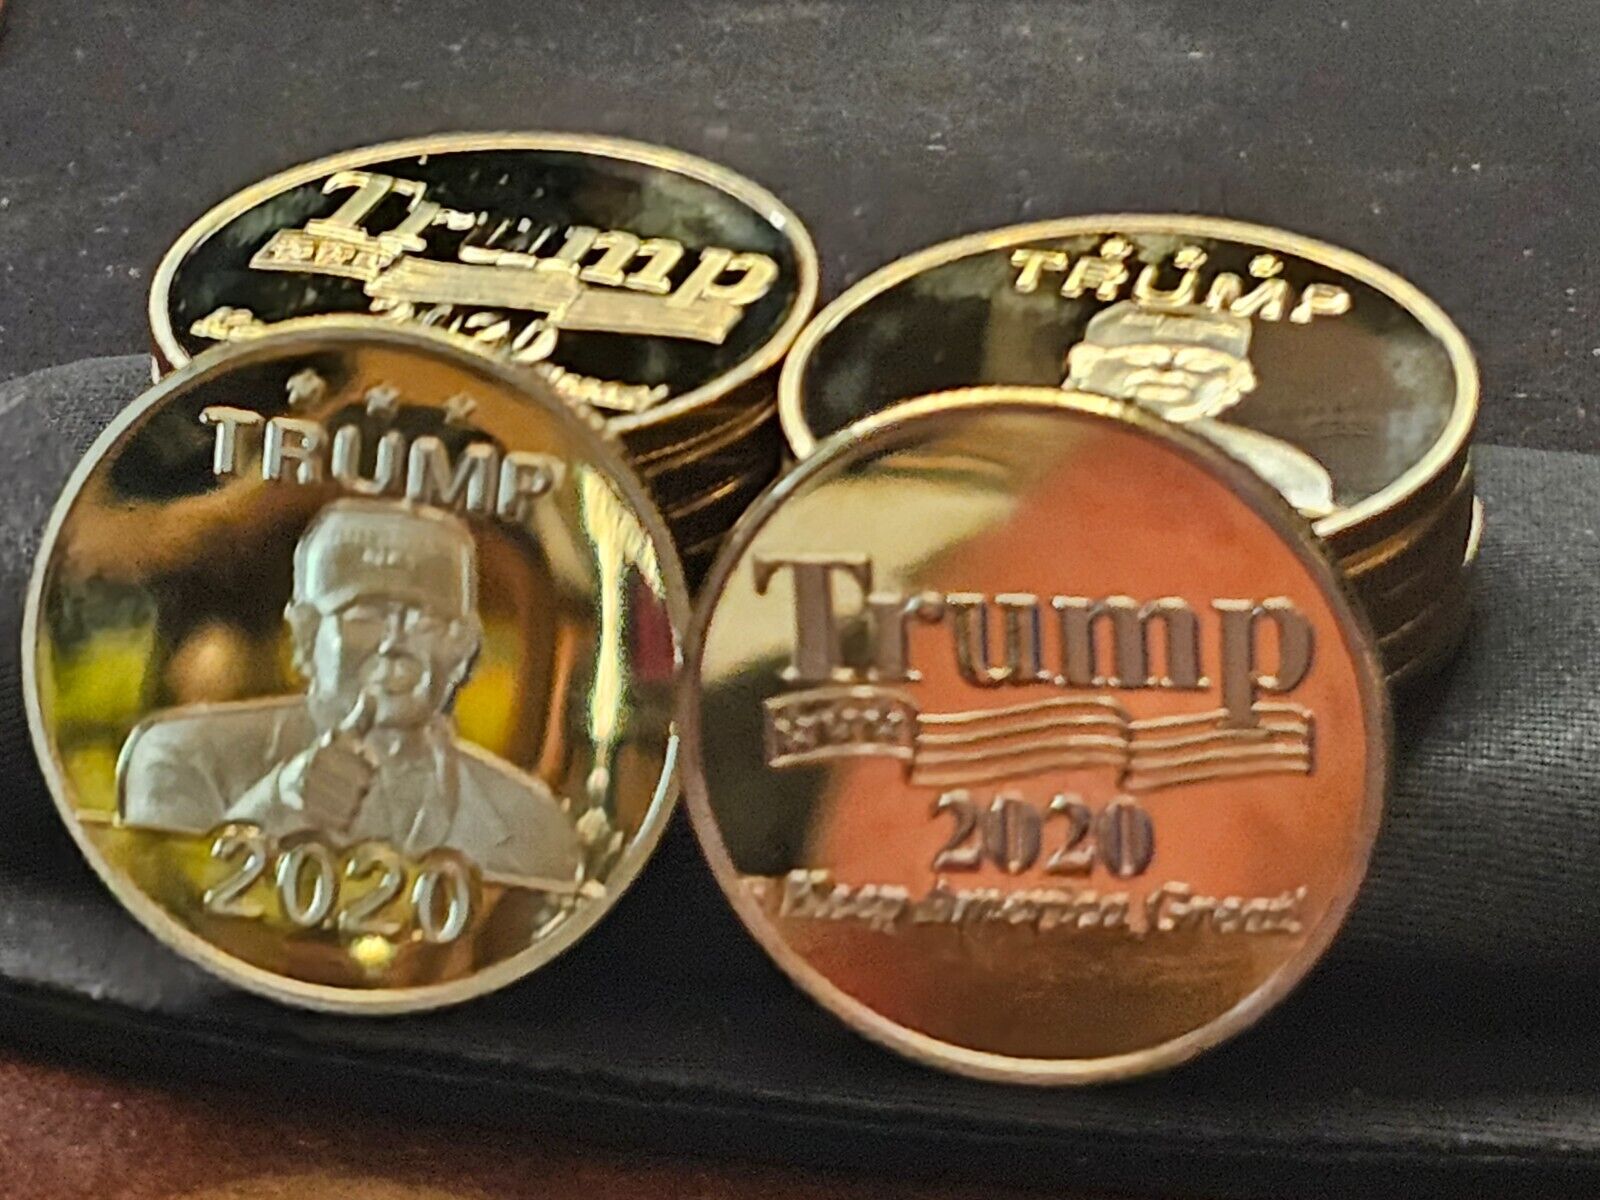 2020 Donald Trump Coin US President golden Keep Ameria Great thumbs up (1 PCS)